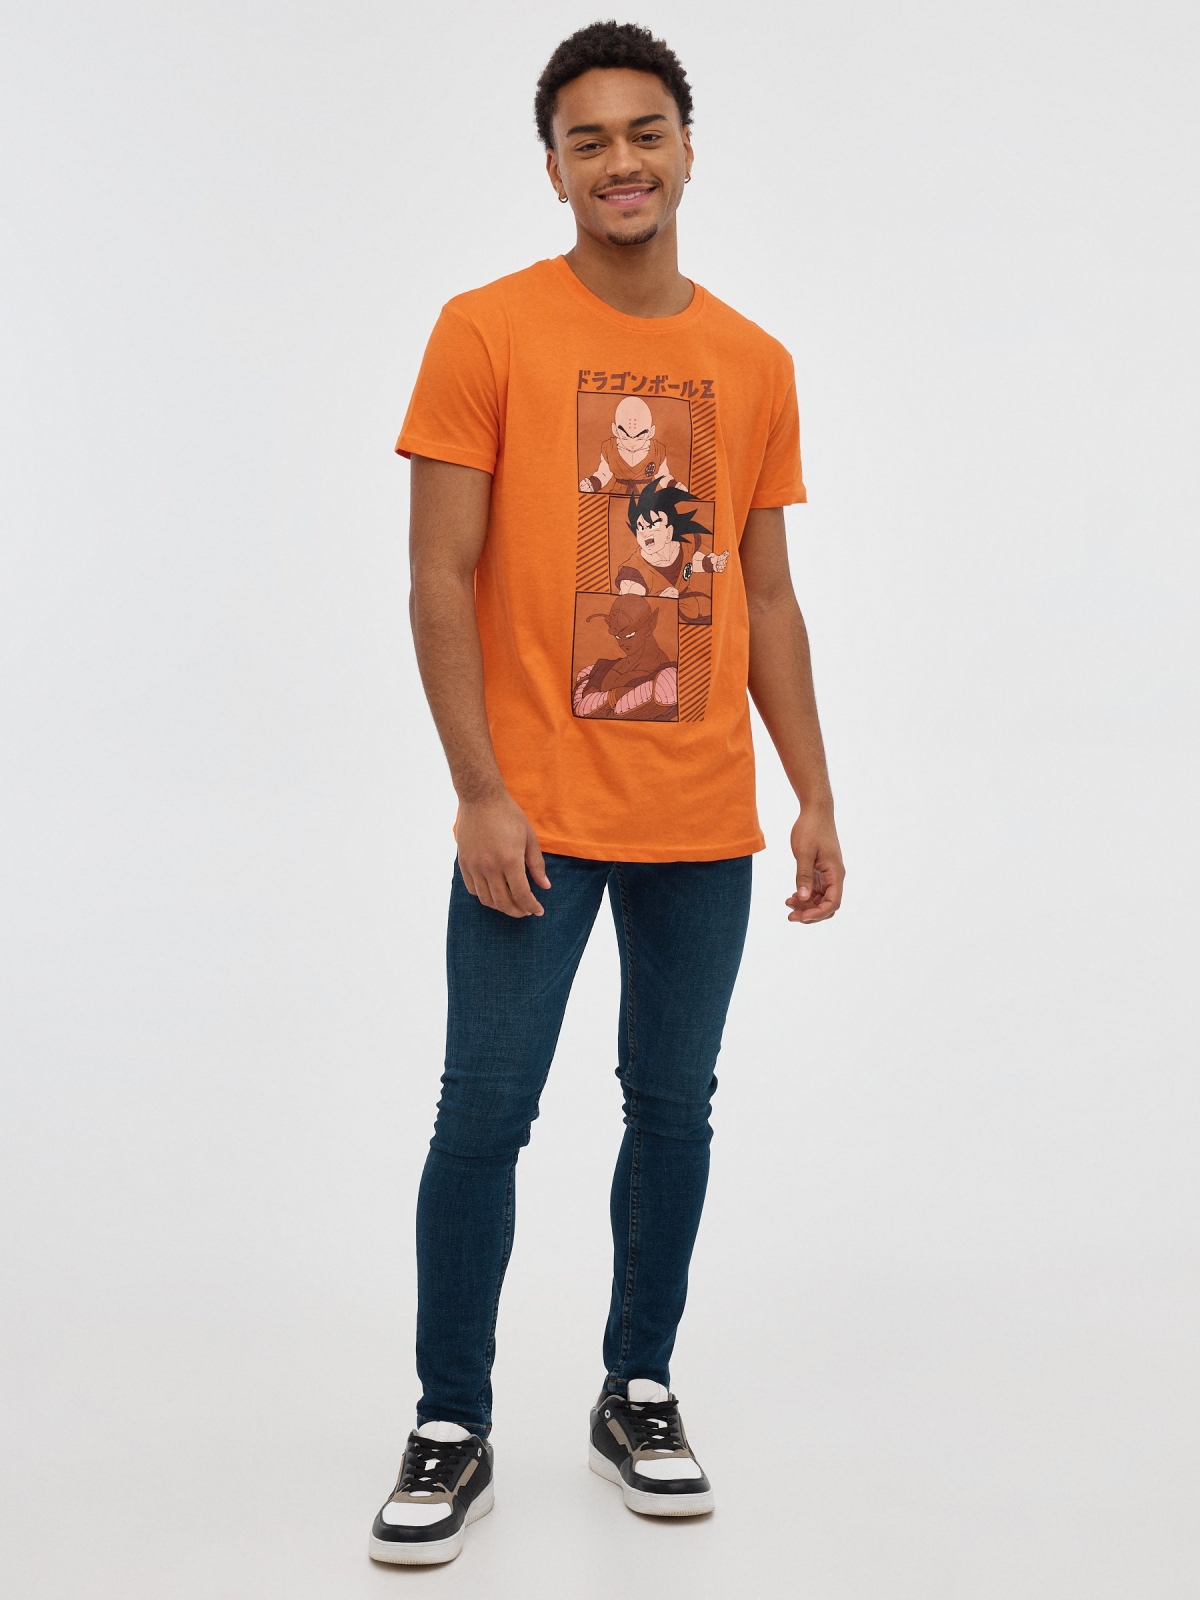 Camiseta naranja Dragon Ball naranja vista general frontal